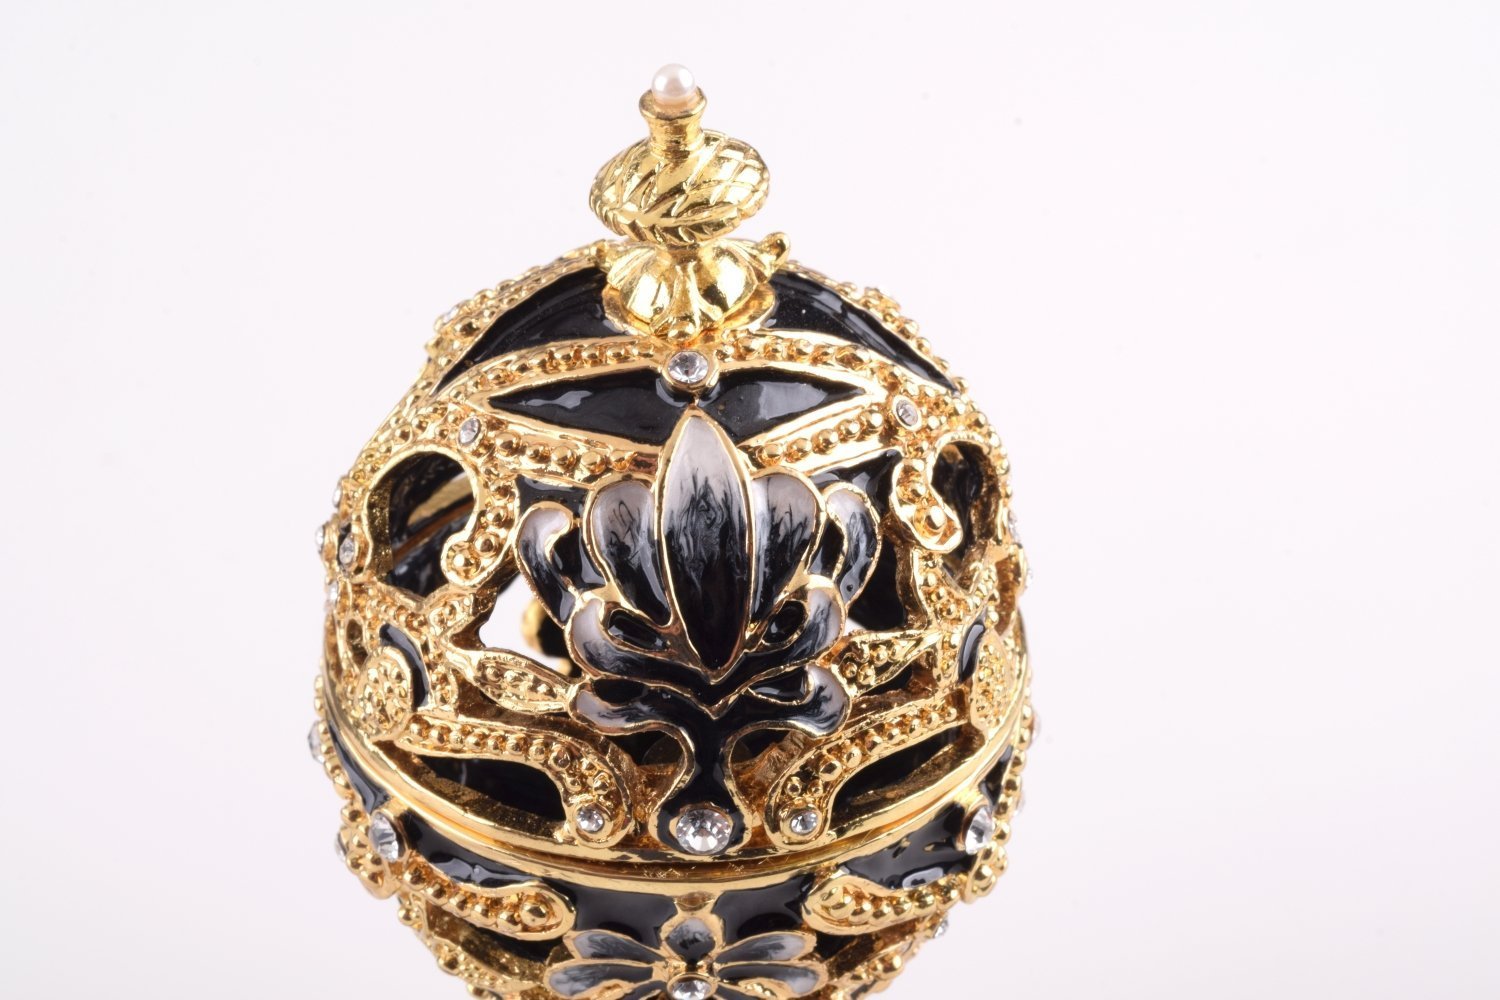 Keren Kopal Gold & Black Faberge Egg  71.50